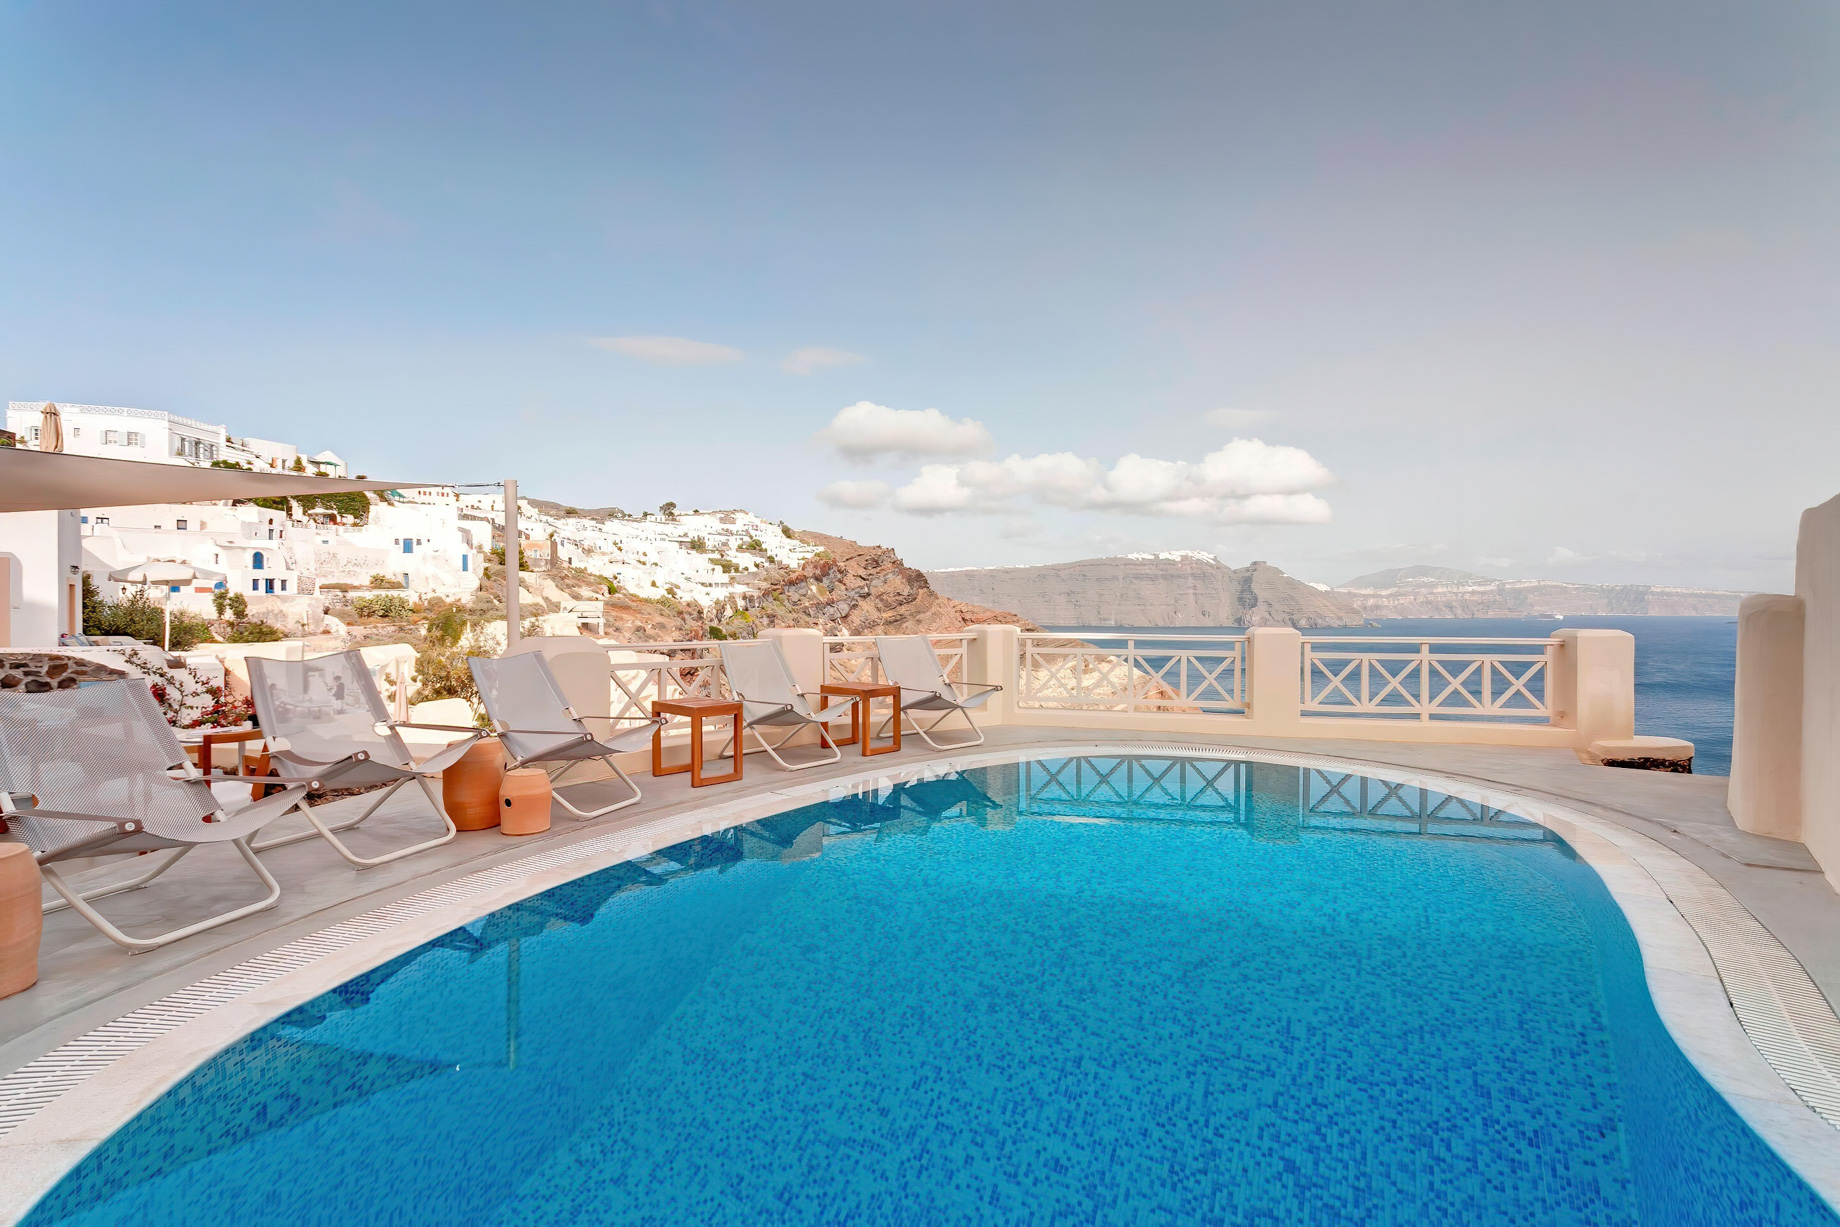 Mystique Hotel Santorini – Oia, Santorini Island, Greece – Pool Overlooking the Caldera